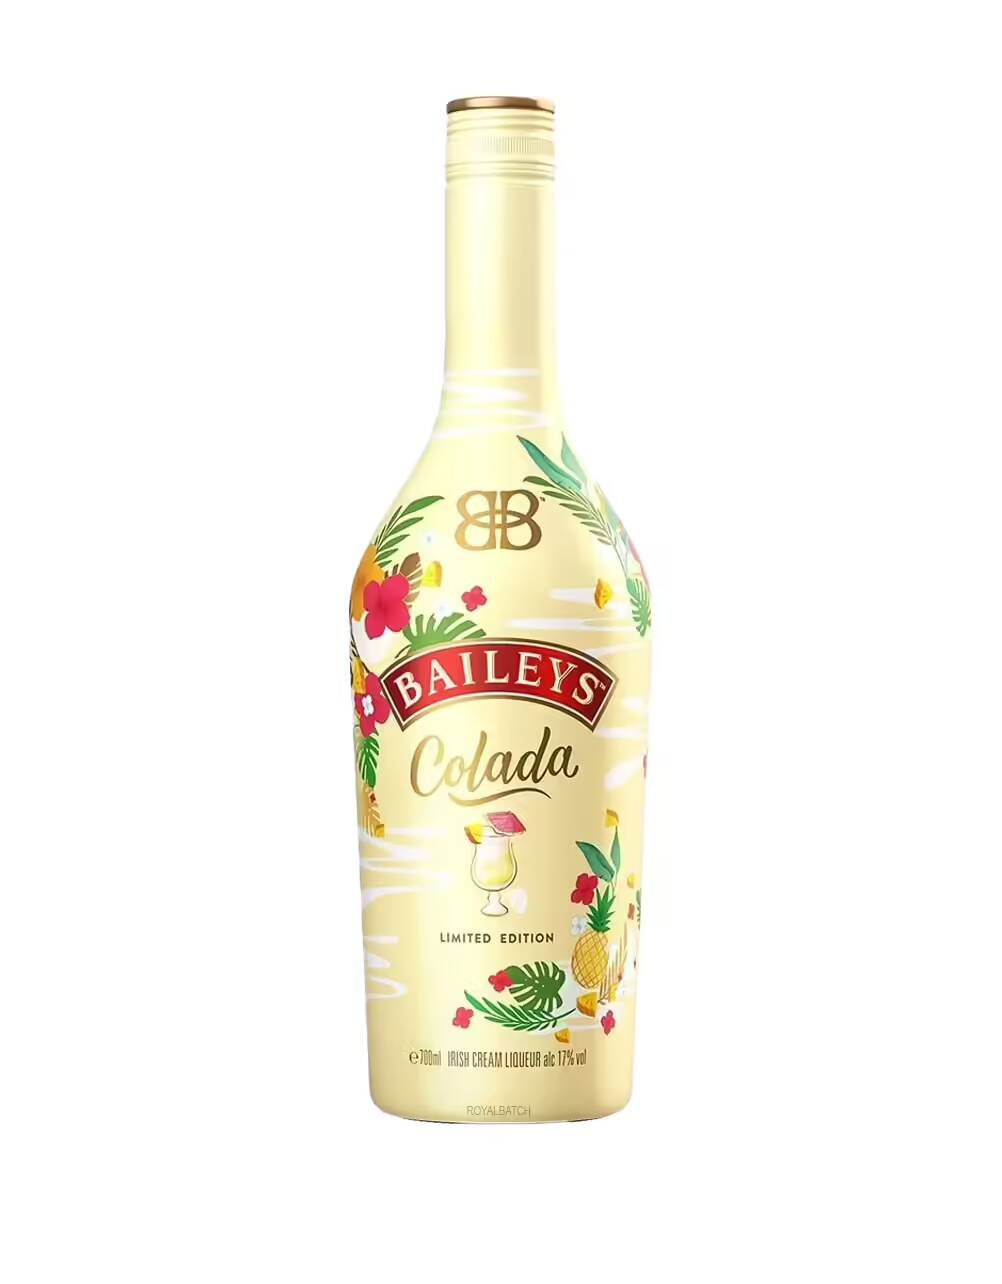 Baileys Colada Limited Edition Irish Cream Liqueur